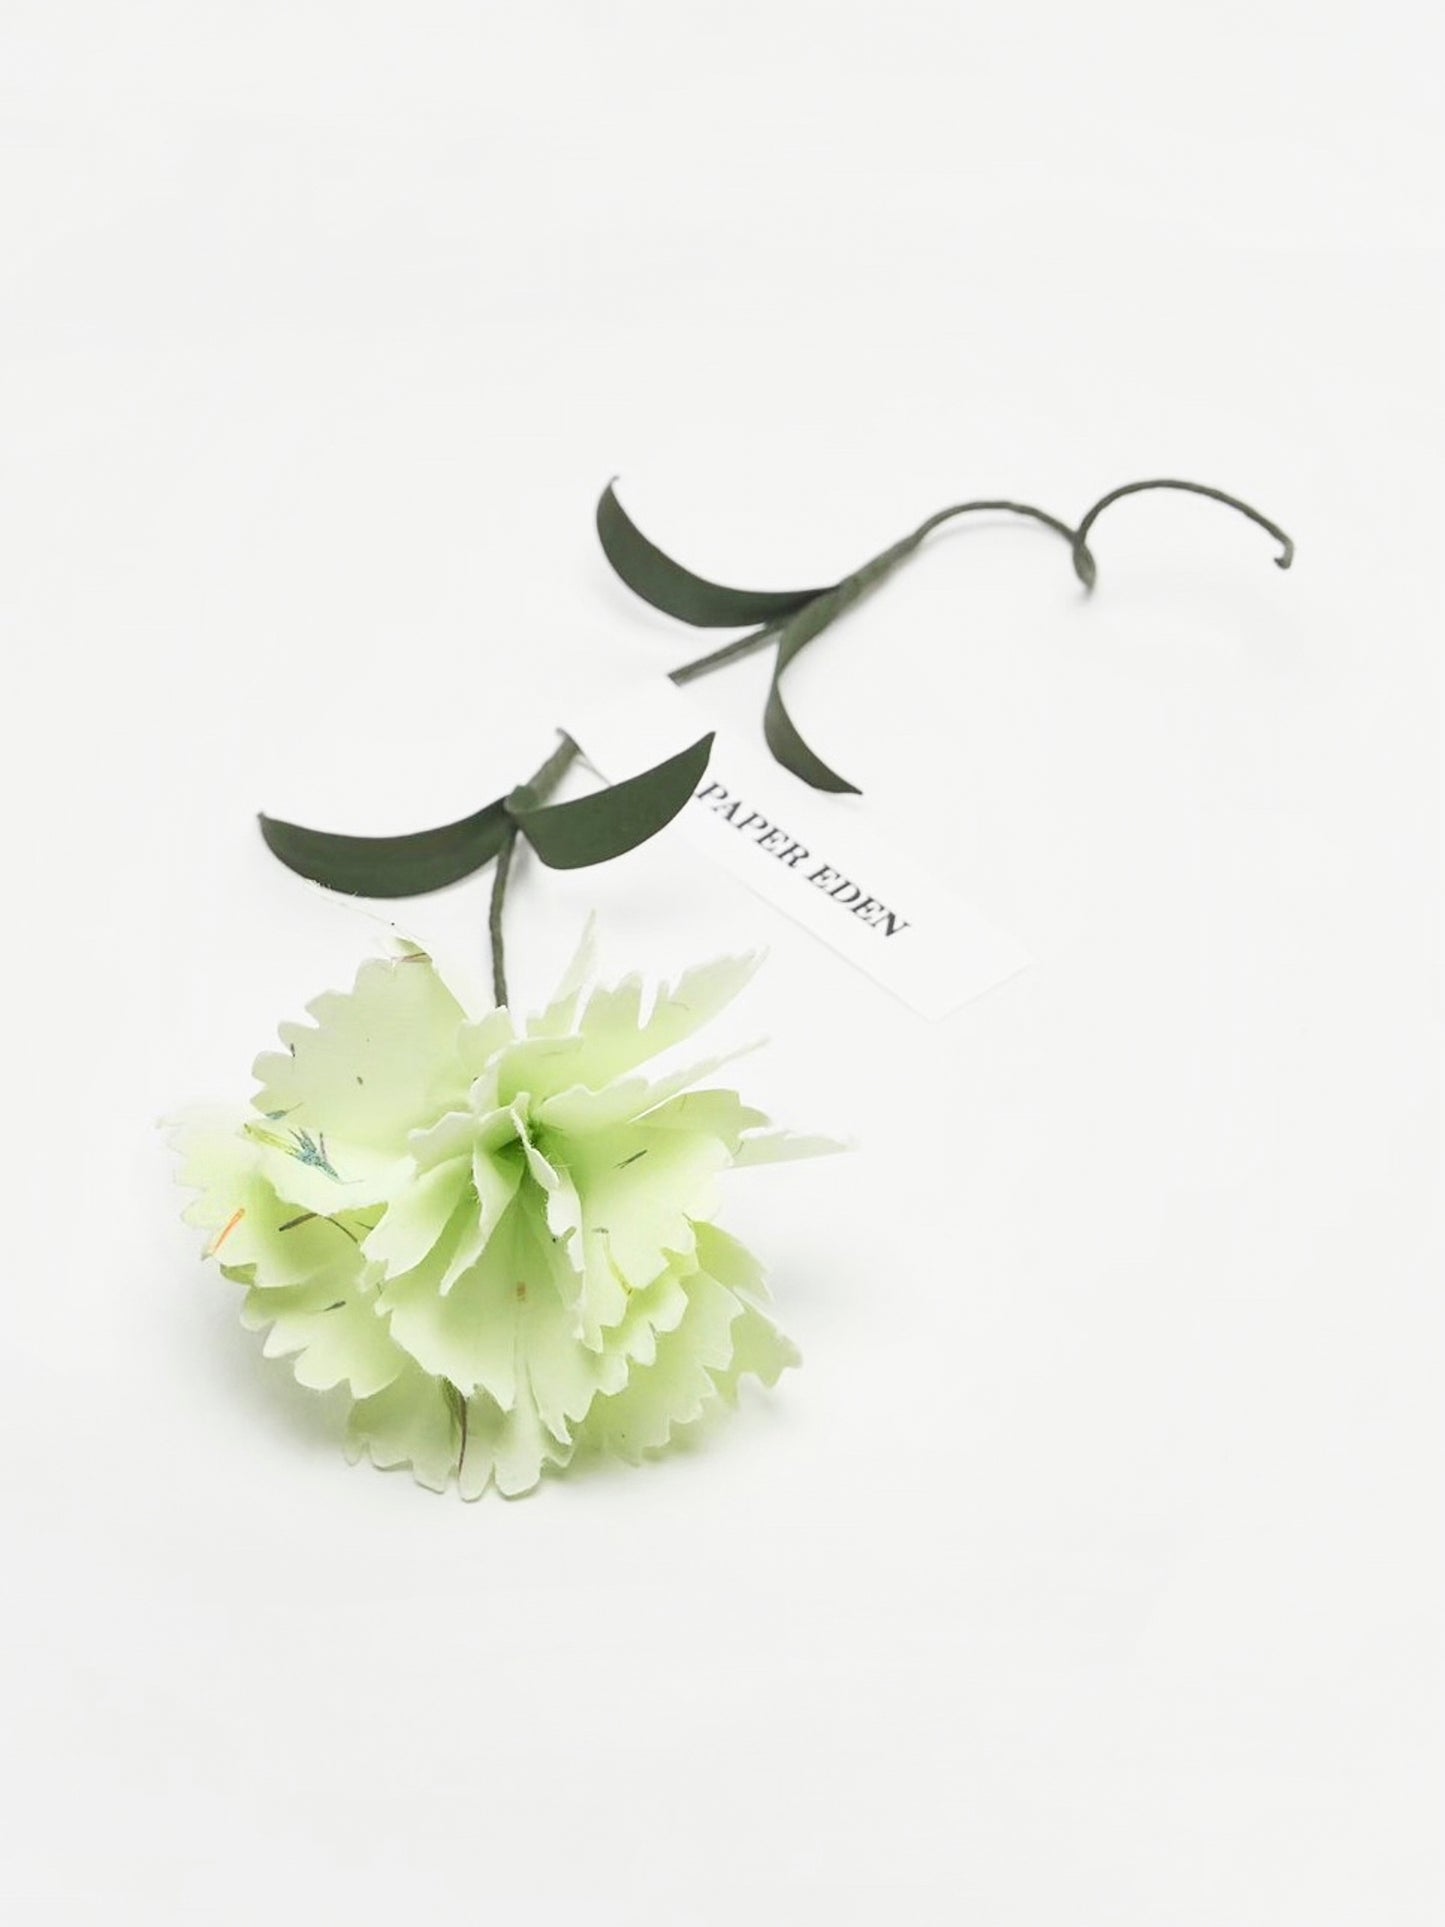 PAPER EDEN:Carnation green "Japanese paper ver."